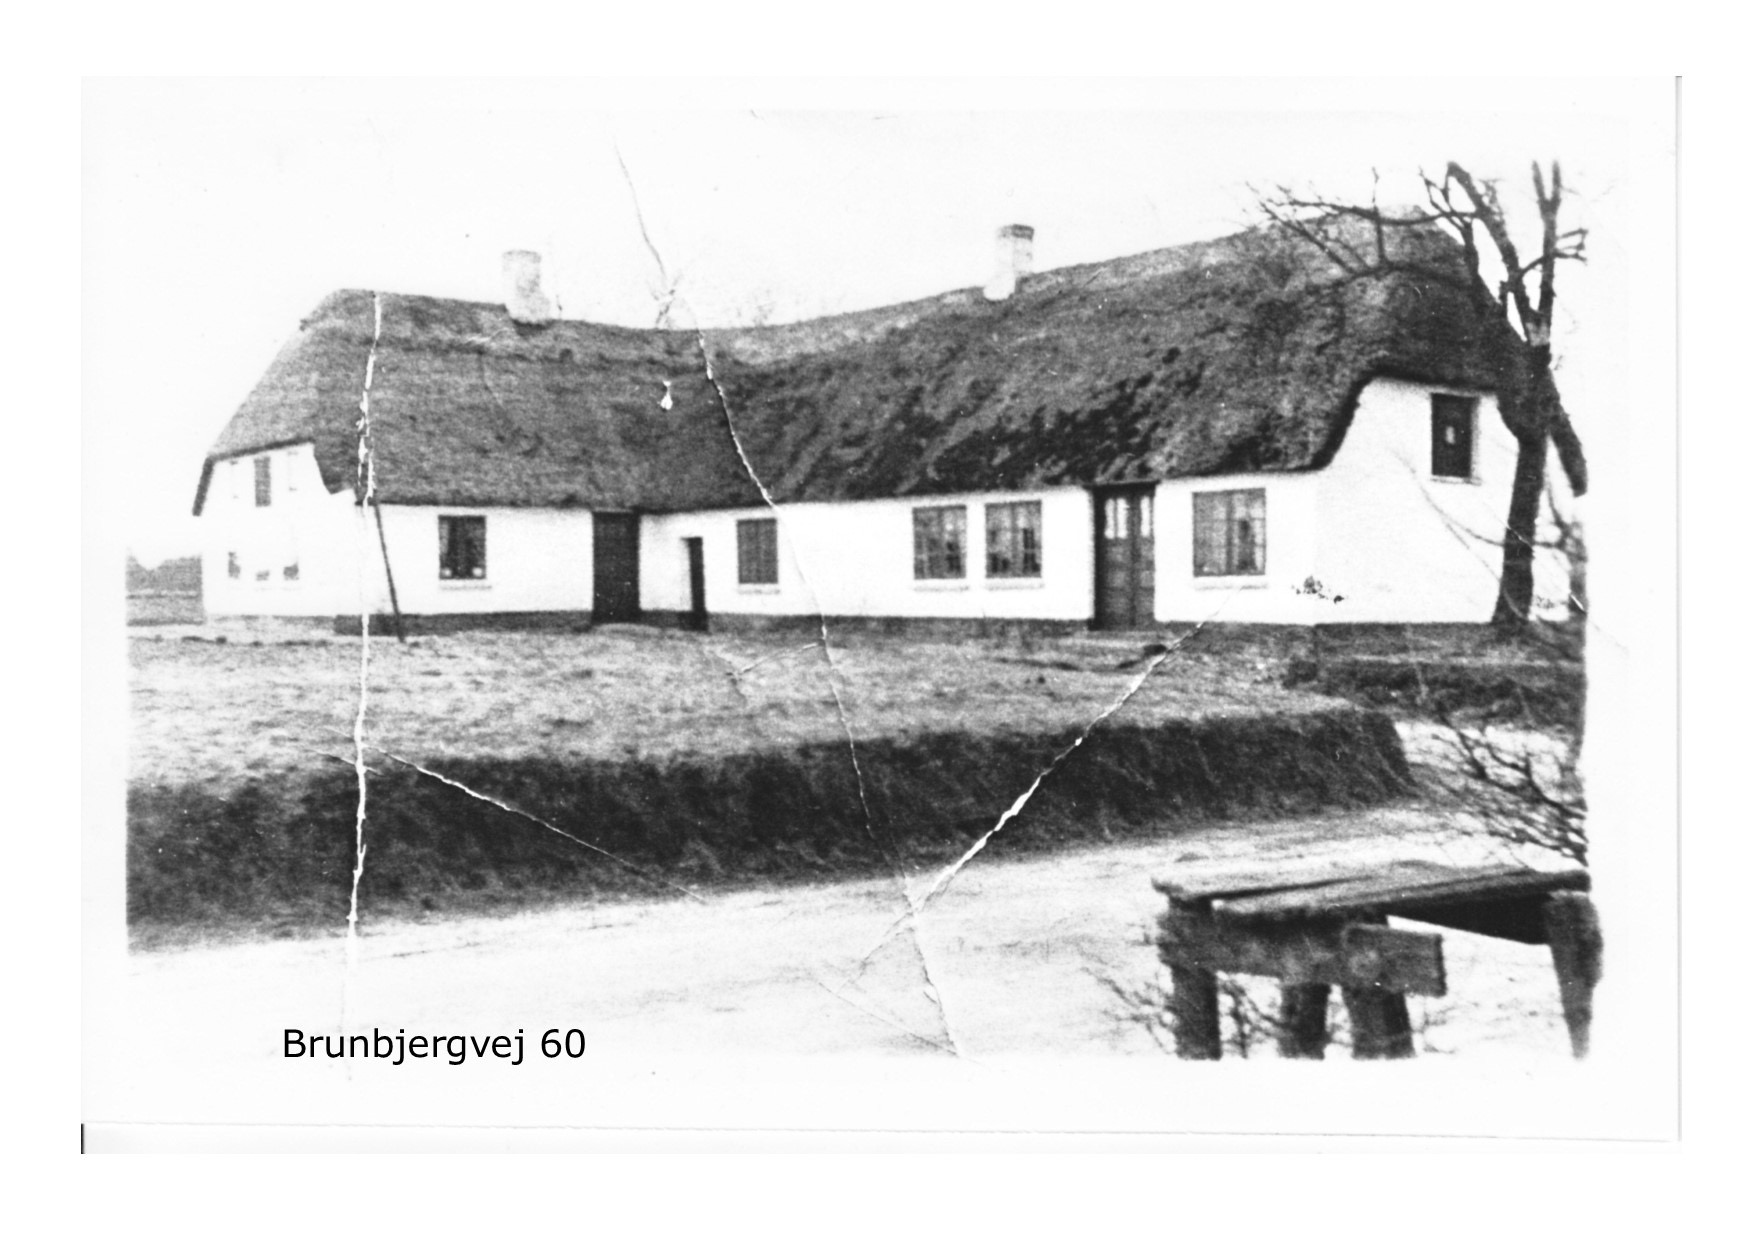 Brunbjergvej 60 